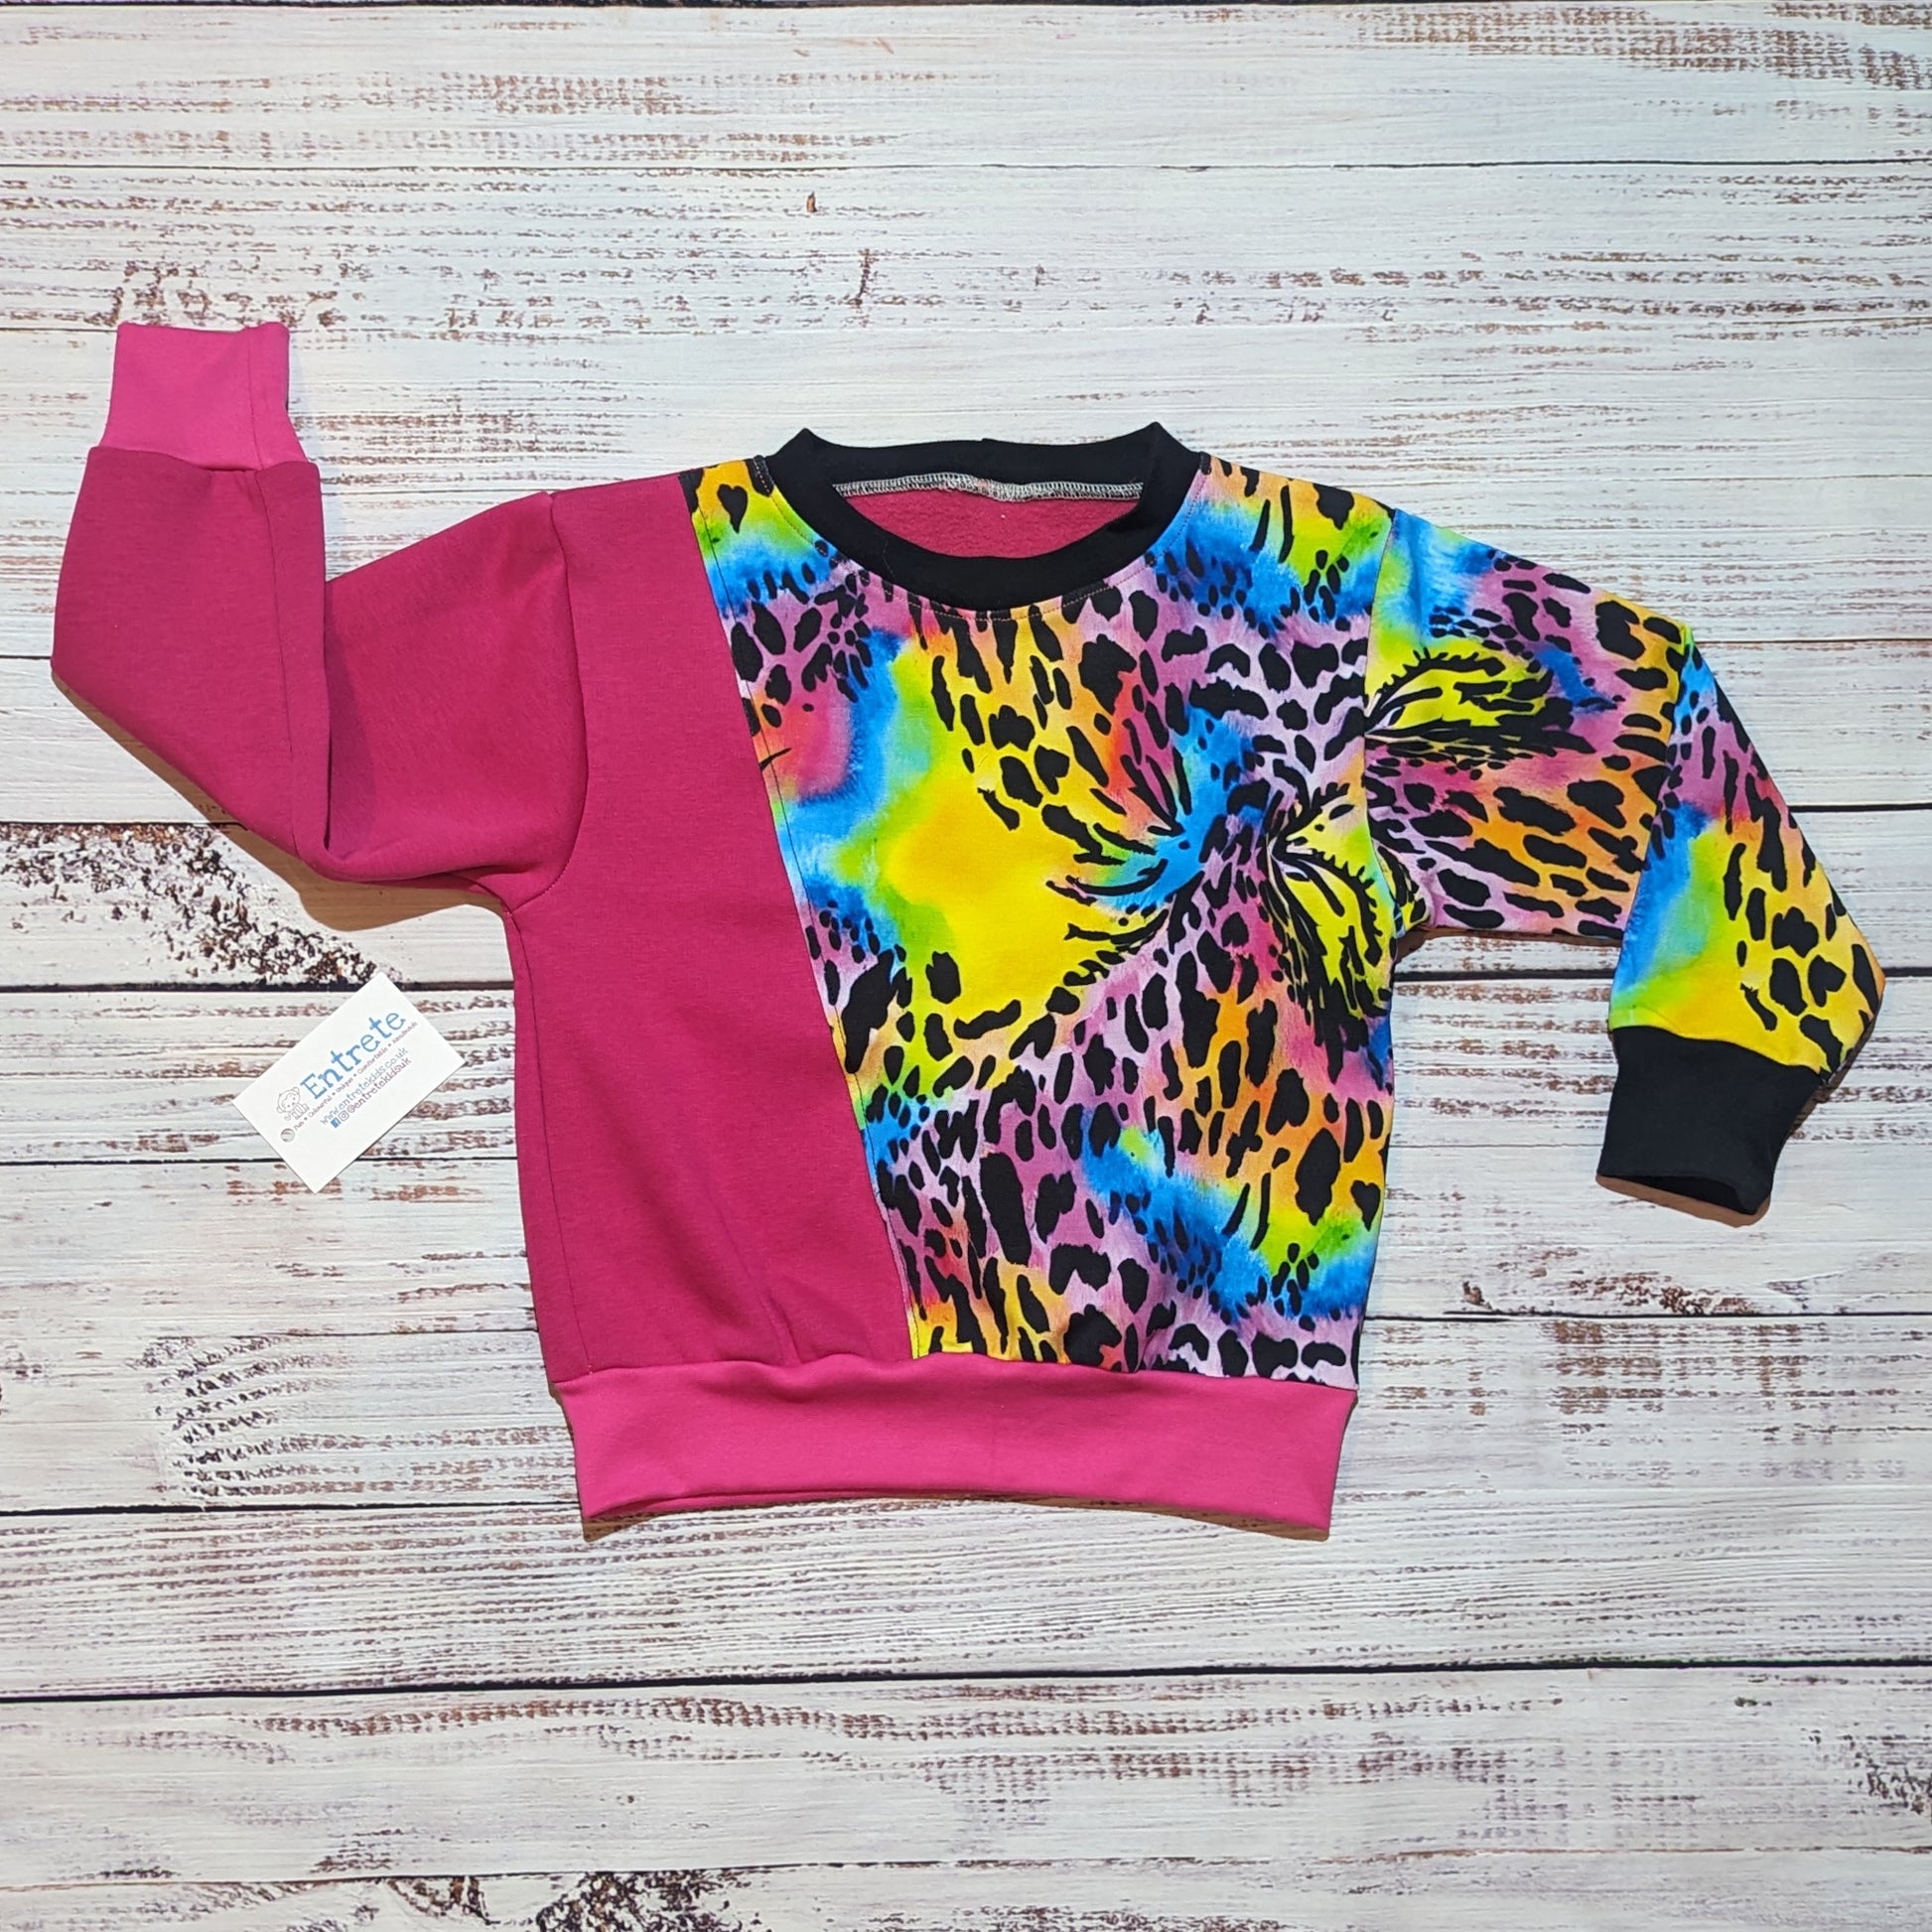 The gorgeous handmade neon animal print and fuchsia sweatshirt.